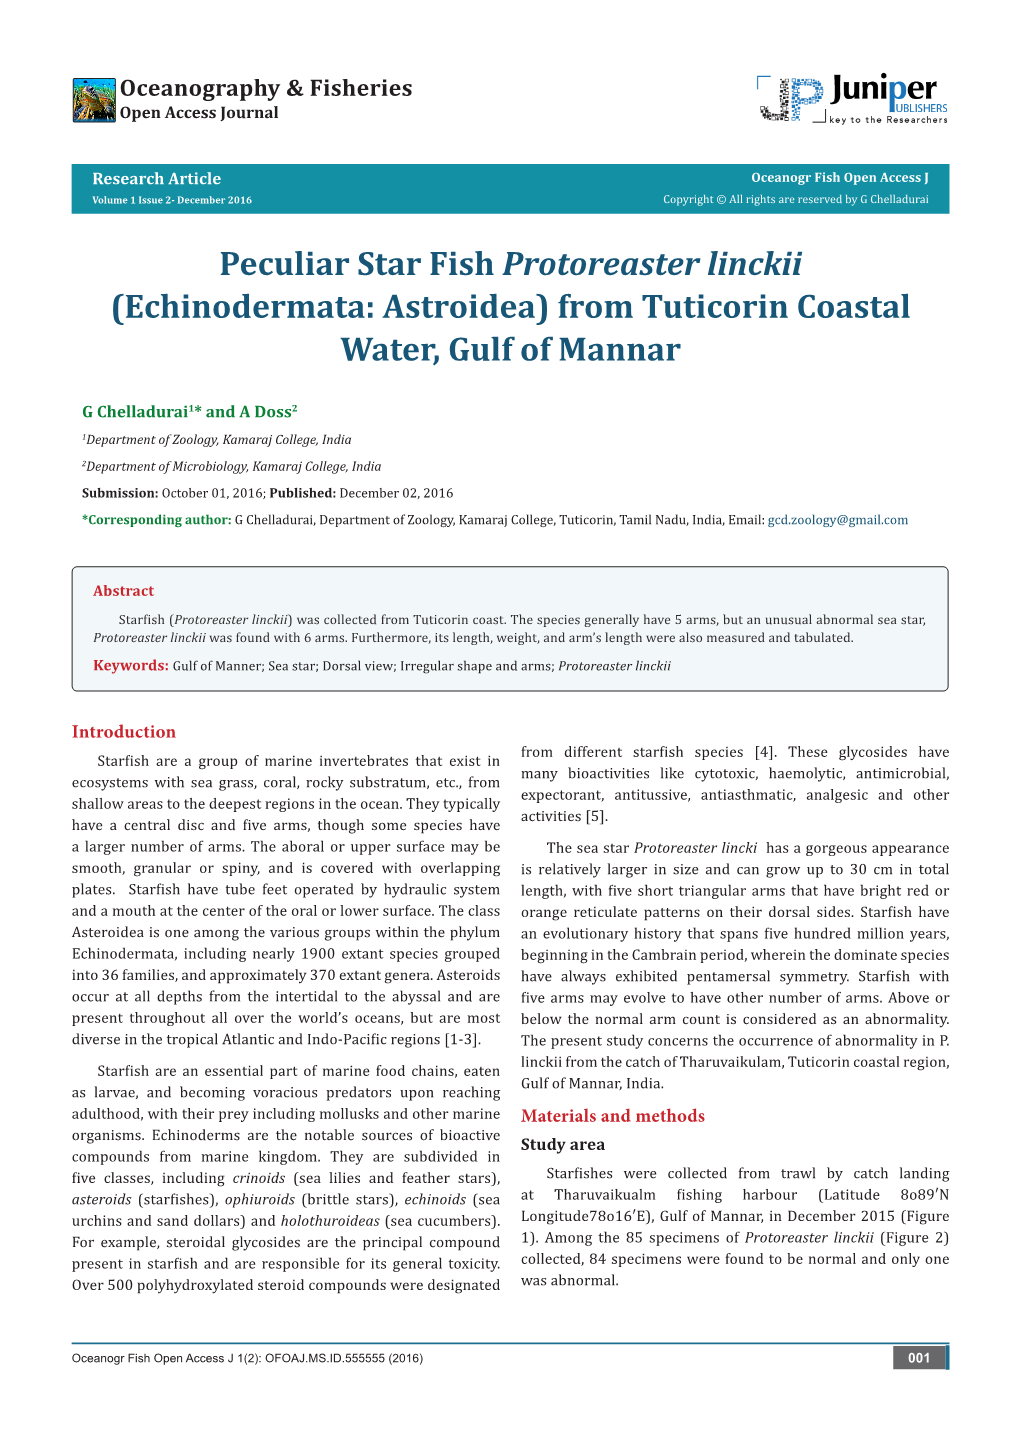 Peculiar Star Fish Protoreaster Linckii (Echinodermata: Astroidea) from Tuticorin Coastal Water, Gulf of Mannar